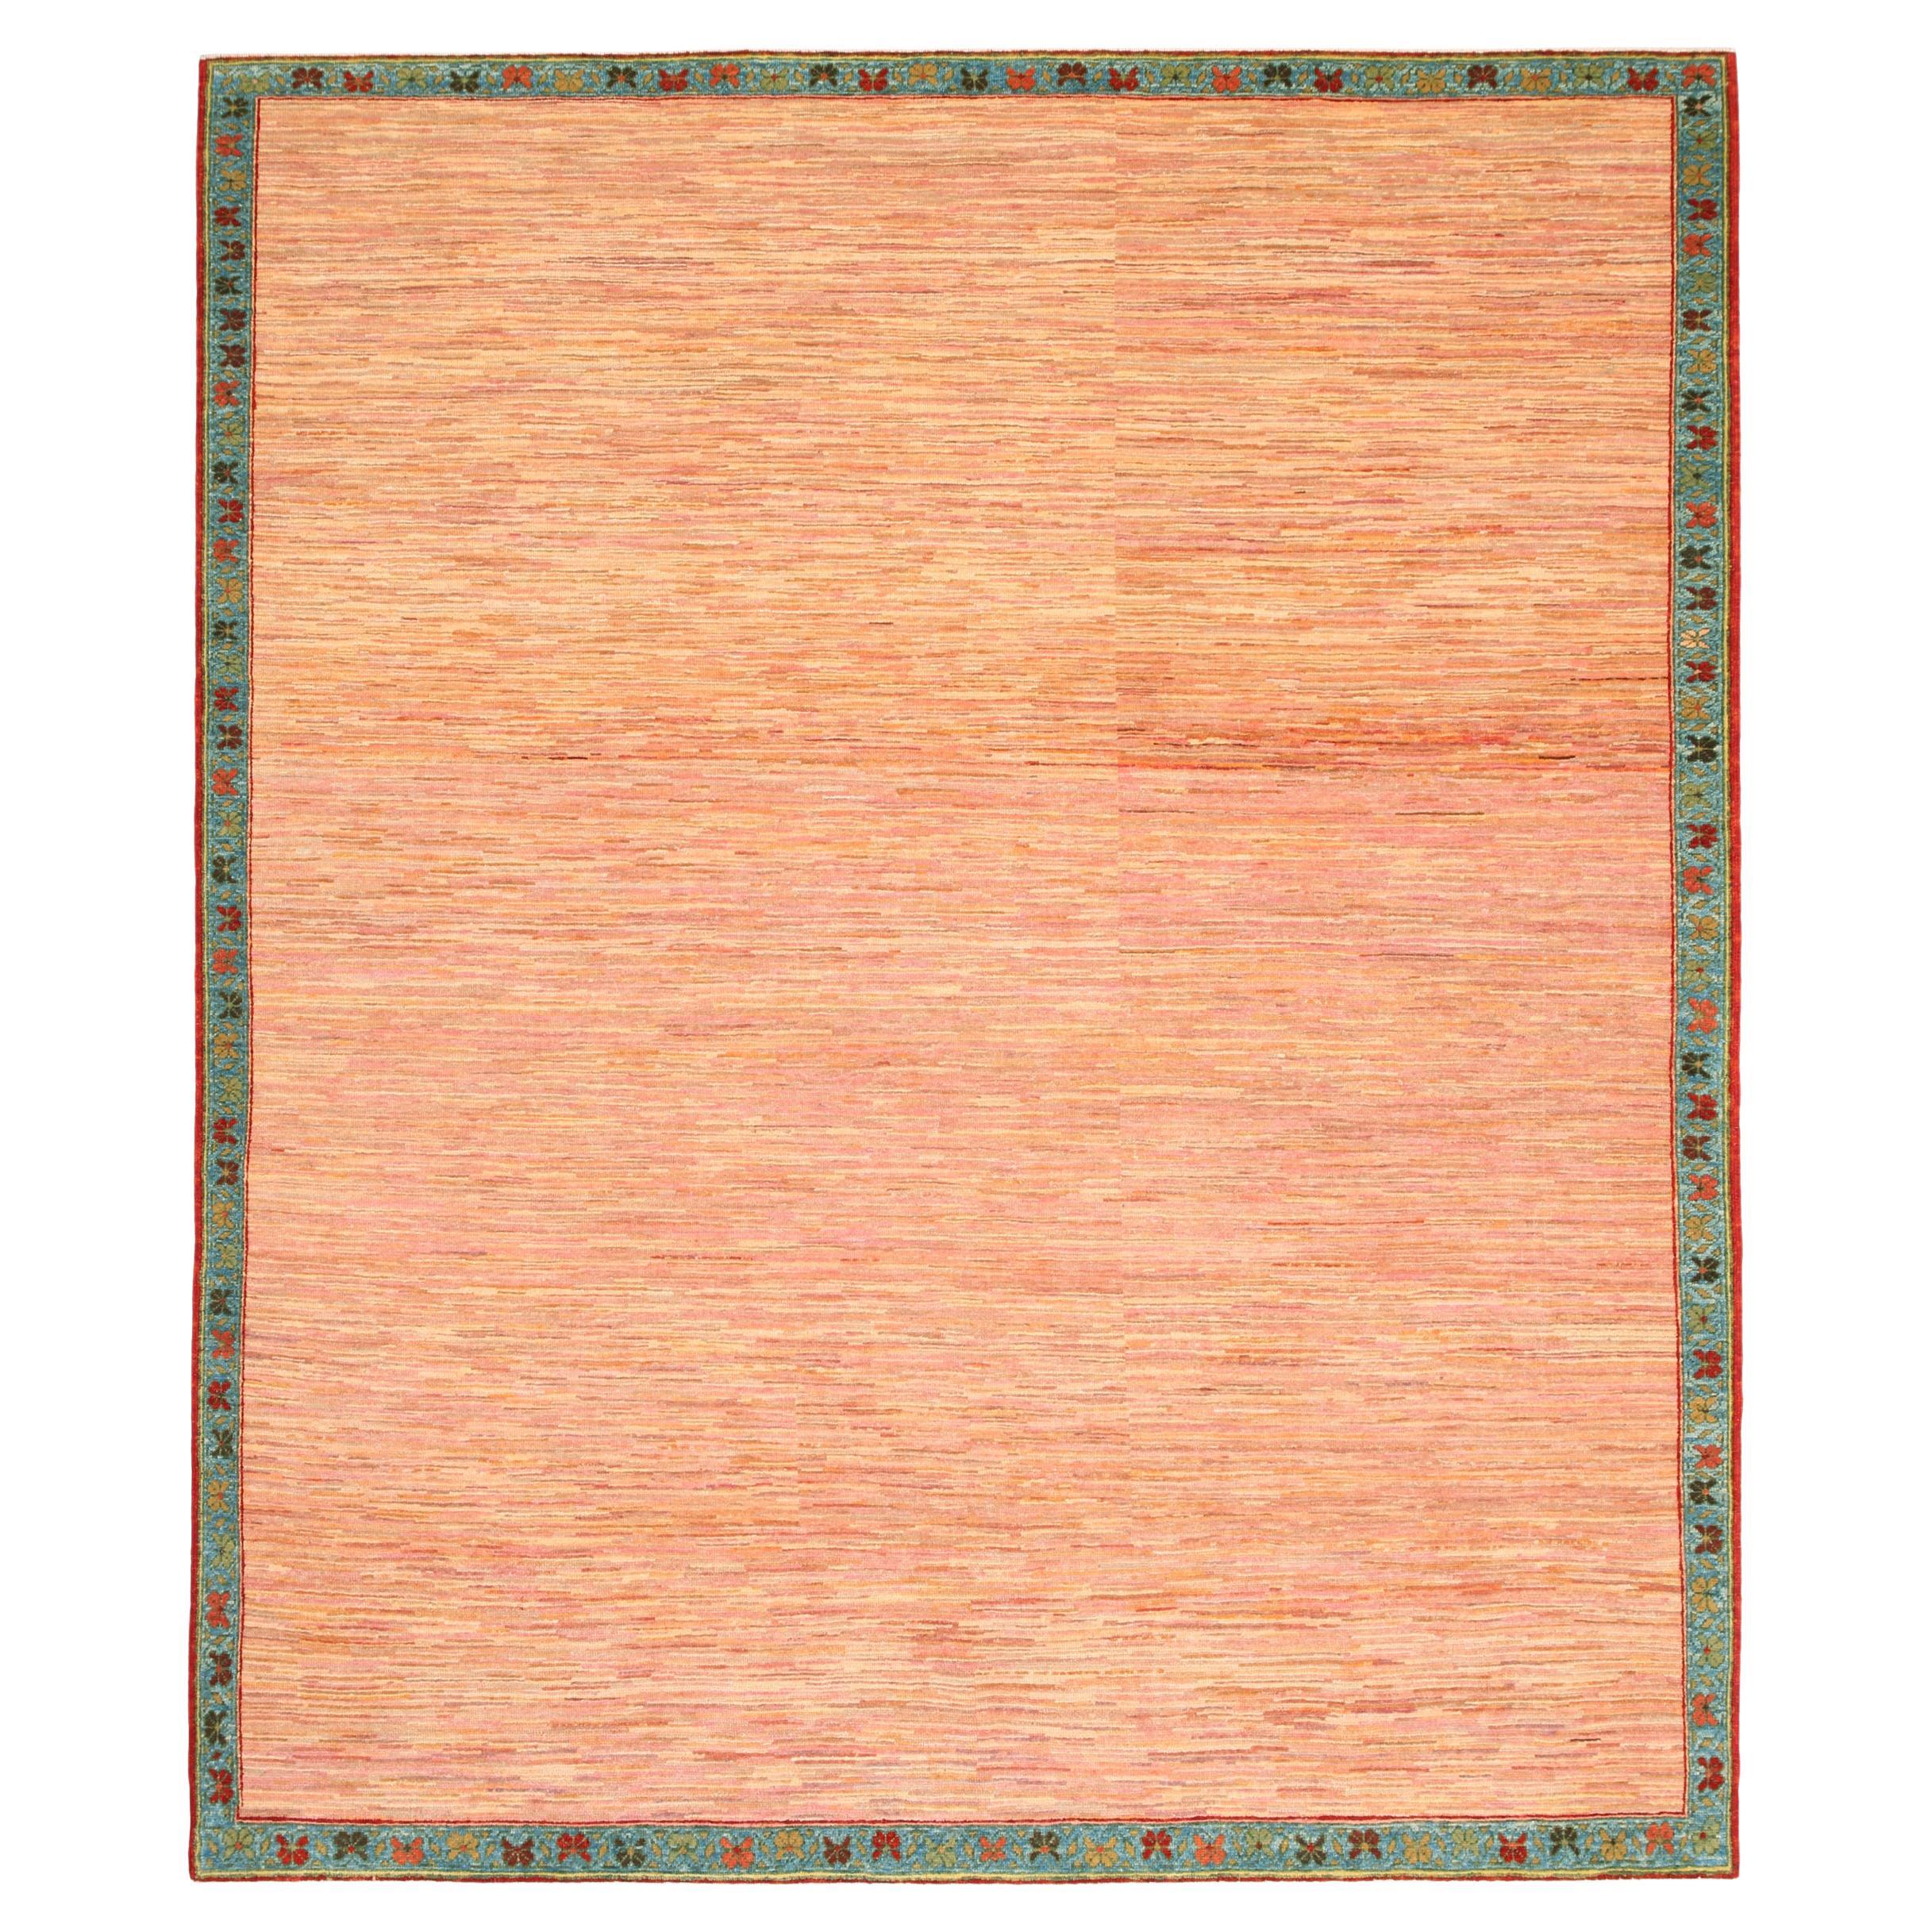 Ararat Rugs the Soft Pink Color Rug, Modern Carpet, Natural Dyed For Sale